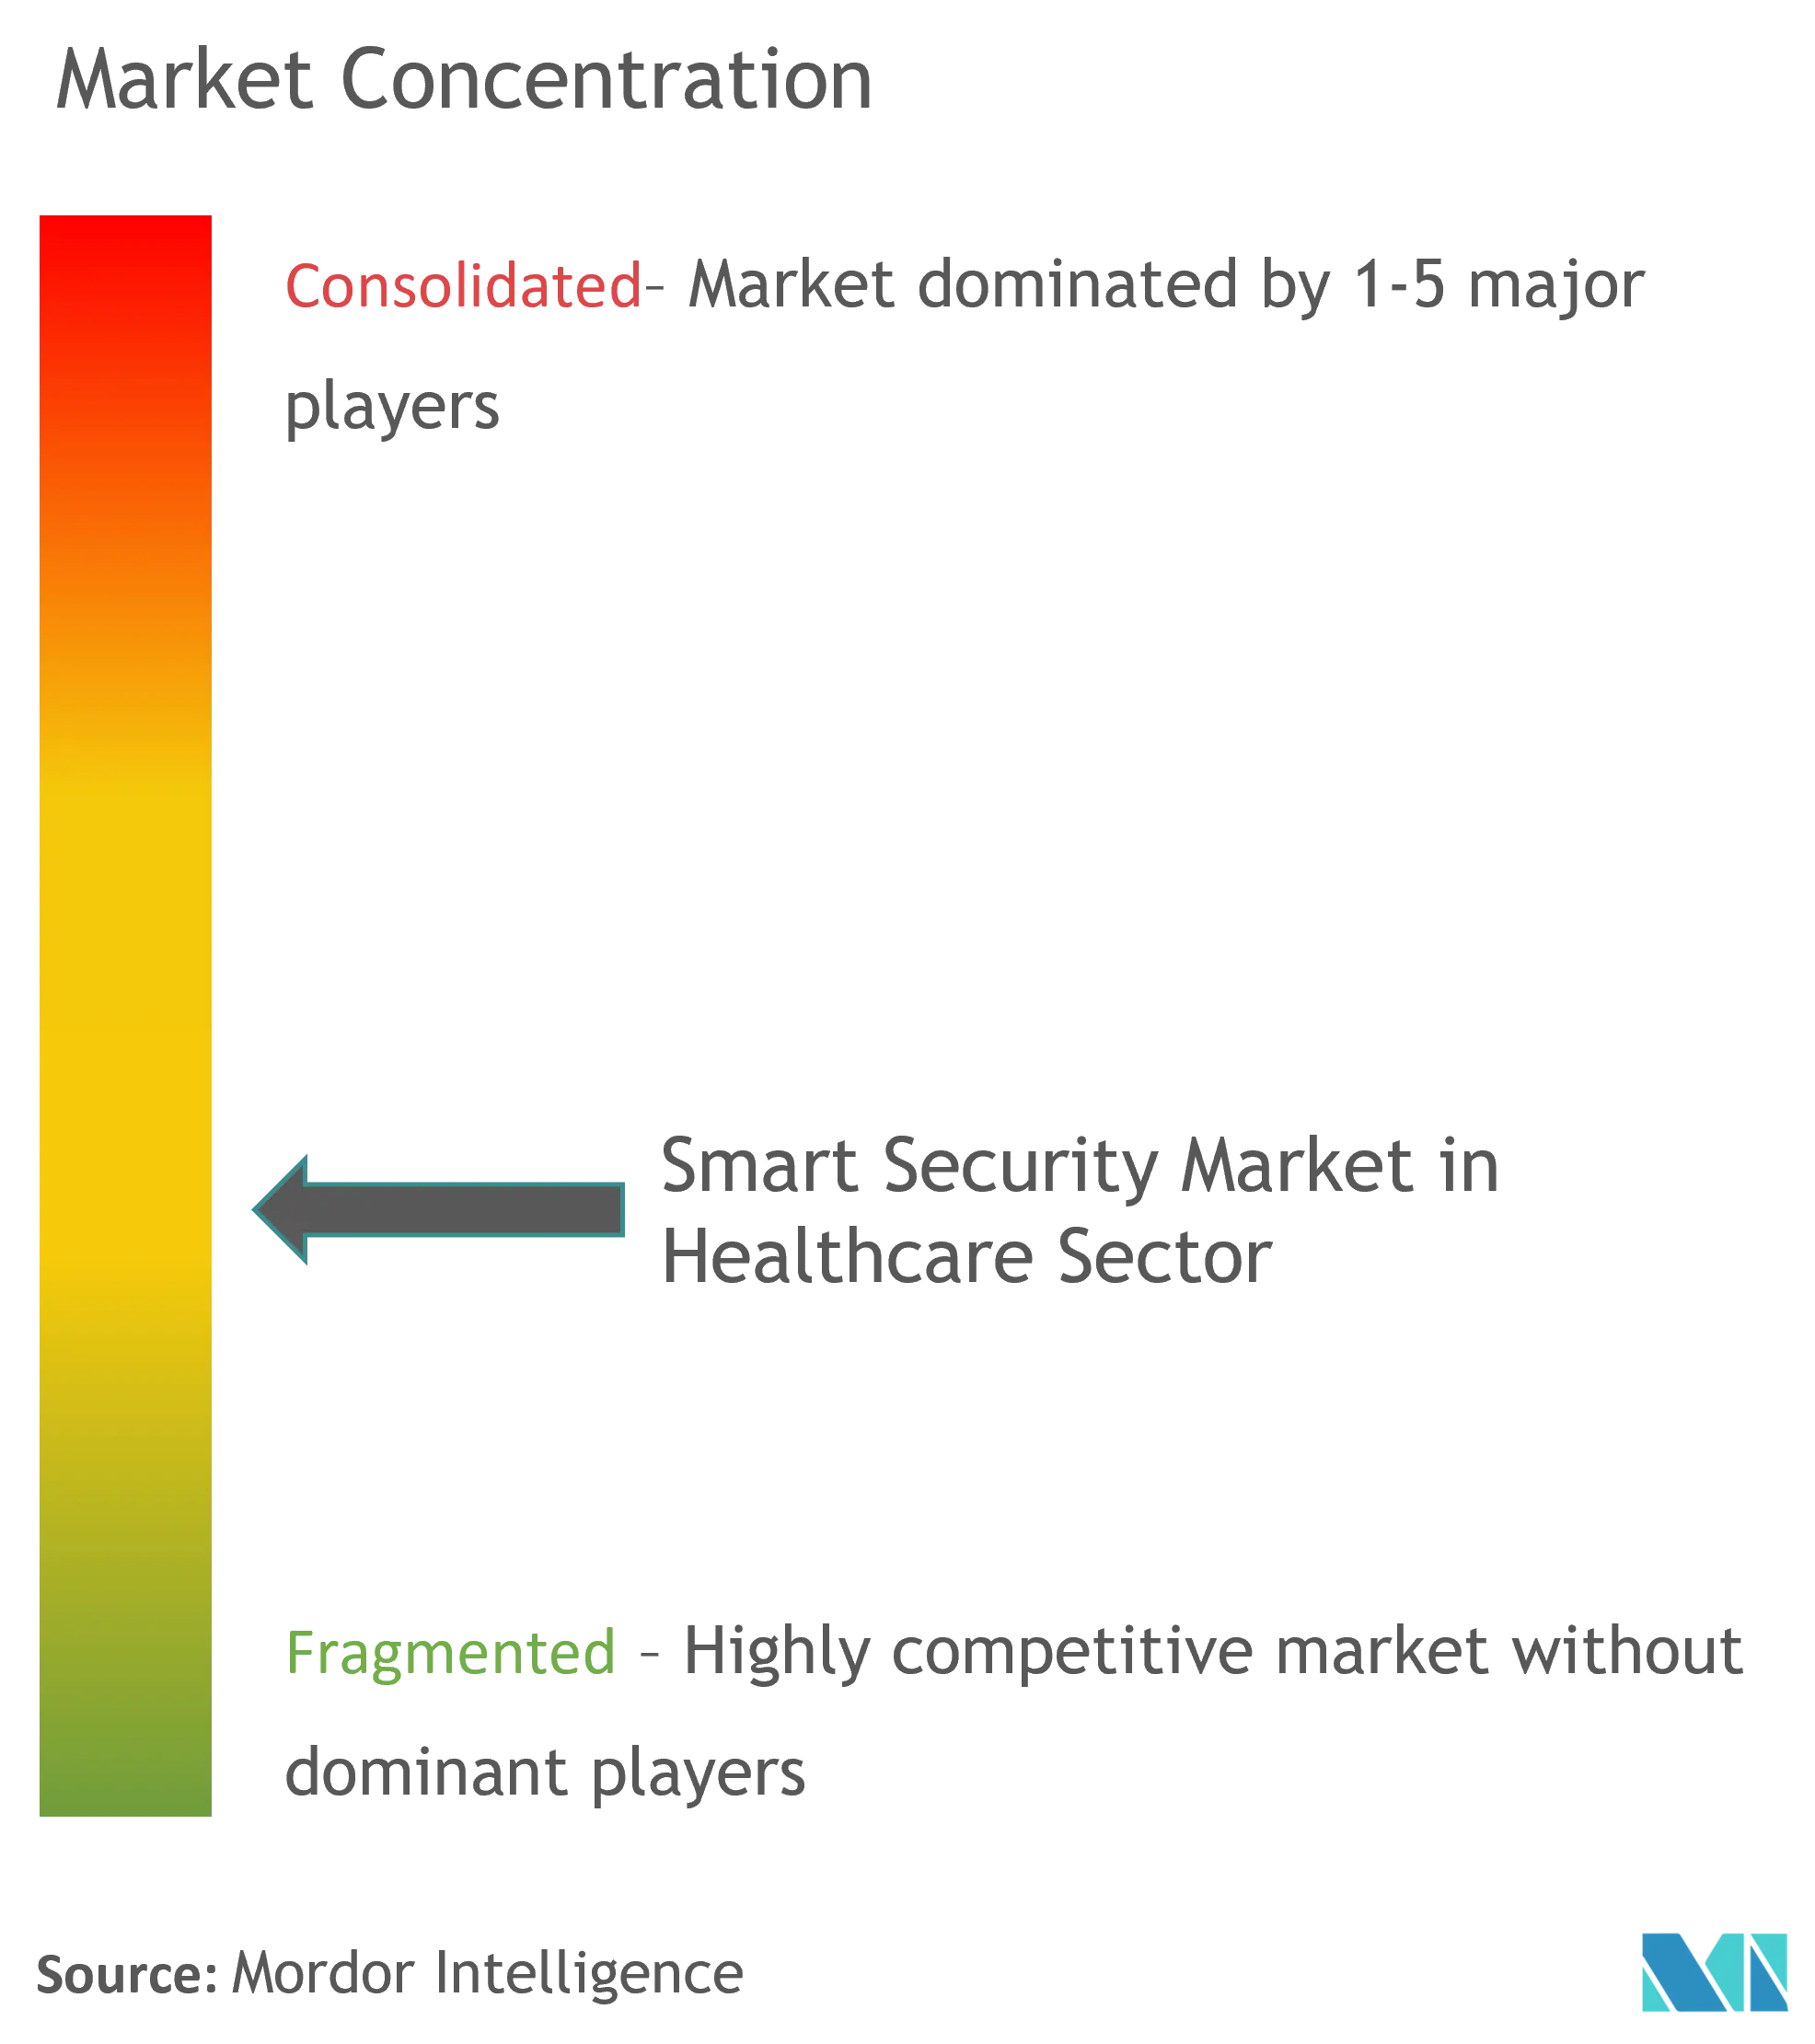 Smart Security Market in Healthcare Sector